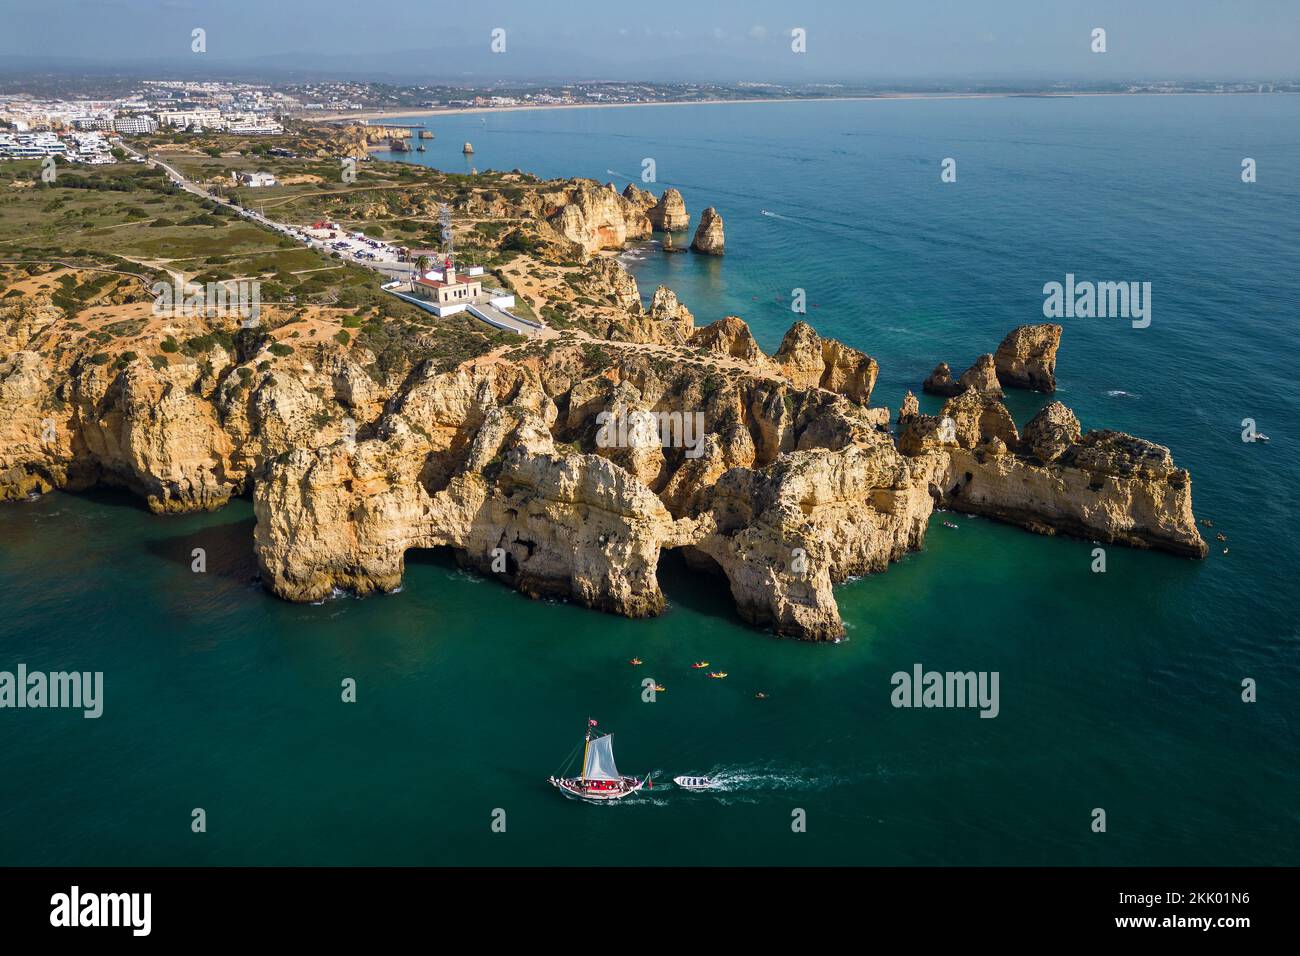 Aerial view of Ponta da Piedade in Lagos, Algarve, Portugal. Stock Photo